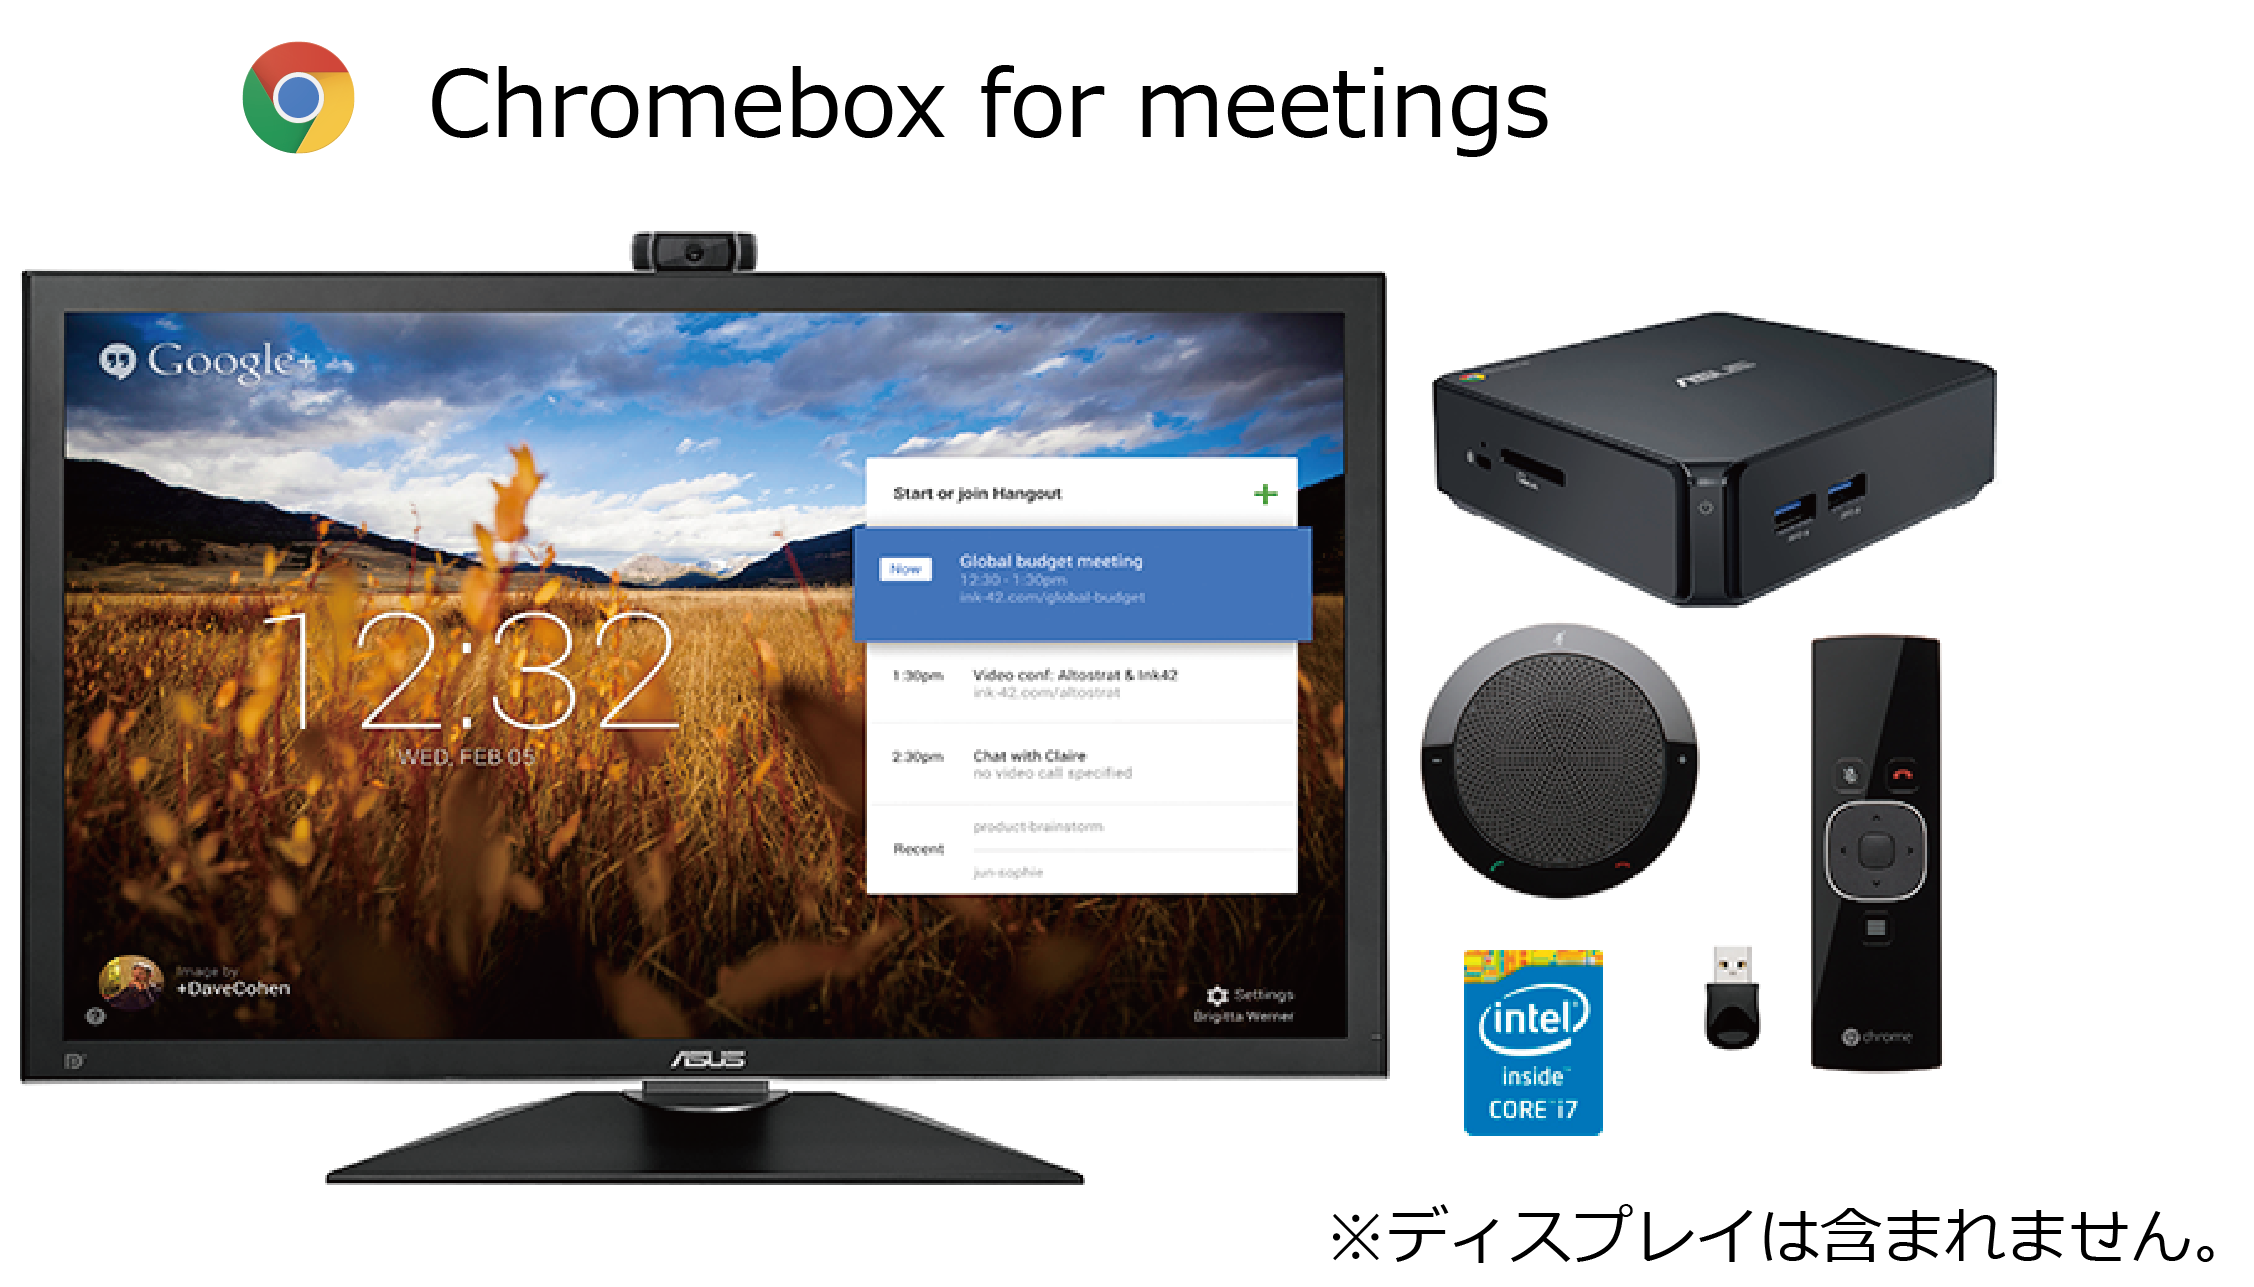 Choromebox for meetings の機器たち